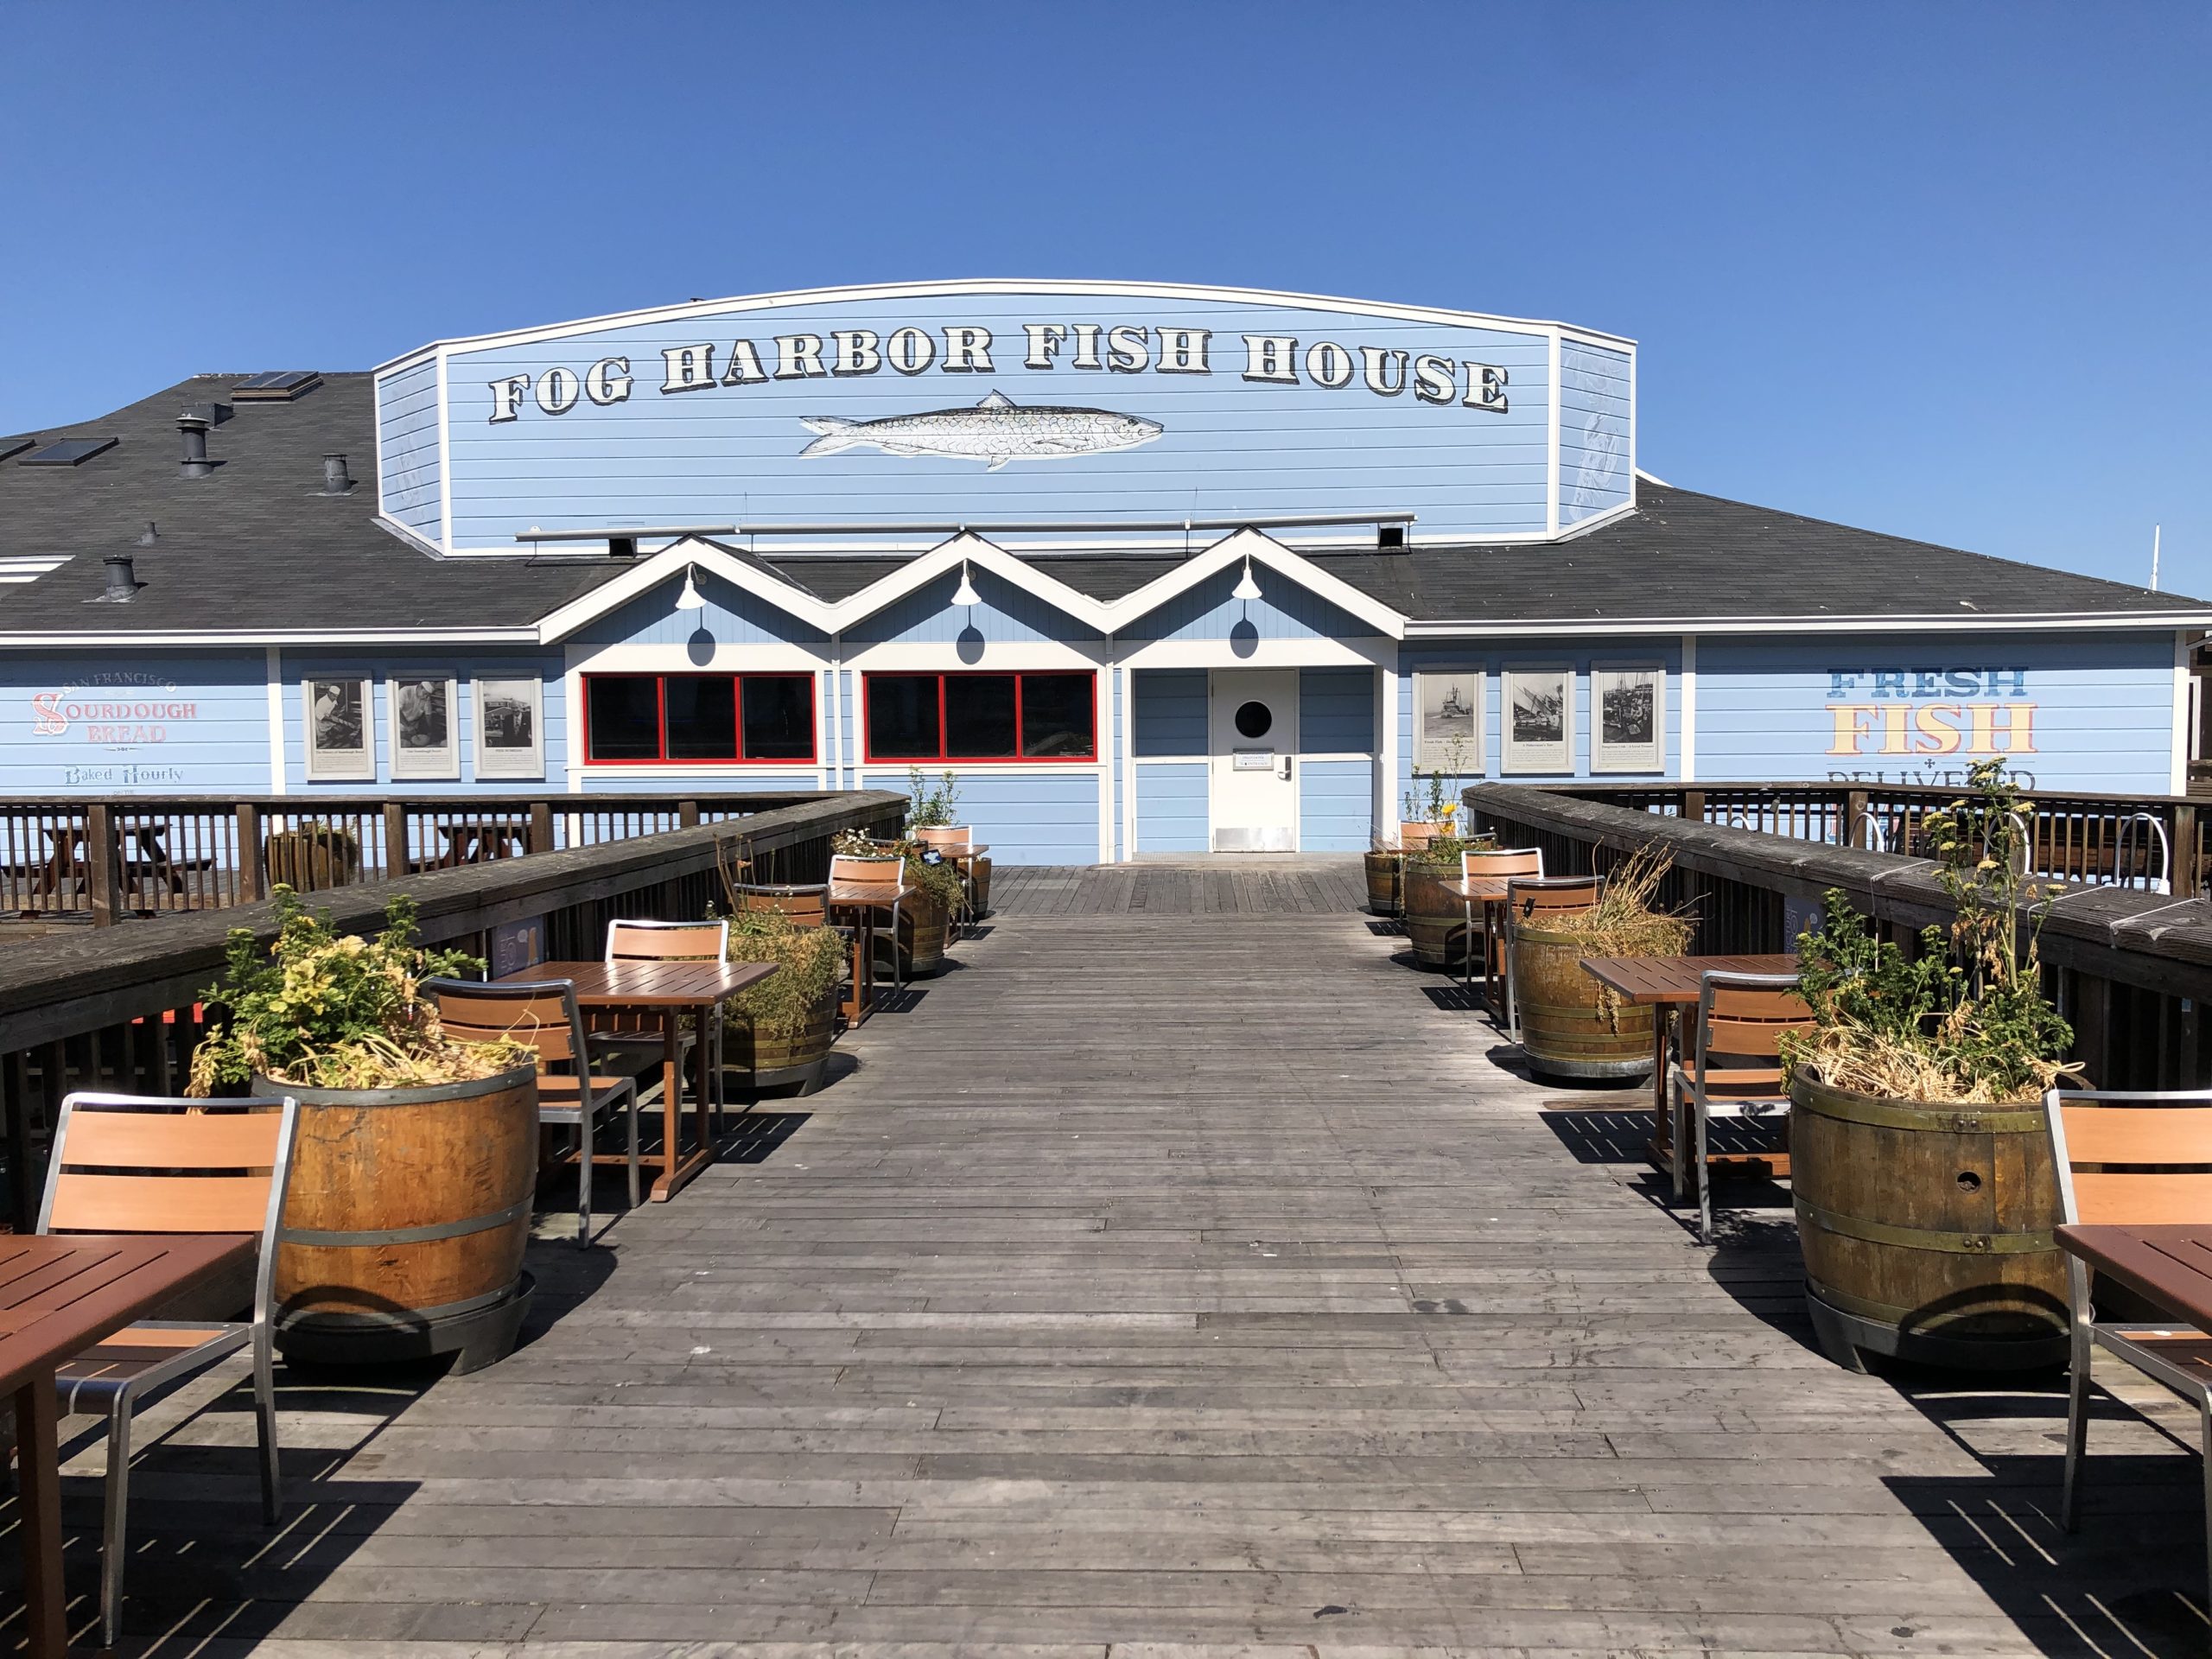 Fisherman's Wharf Pier 39 Restaurant - Best Seafood in San Francisco